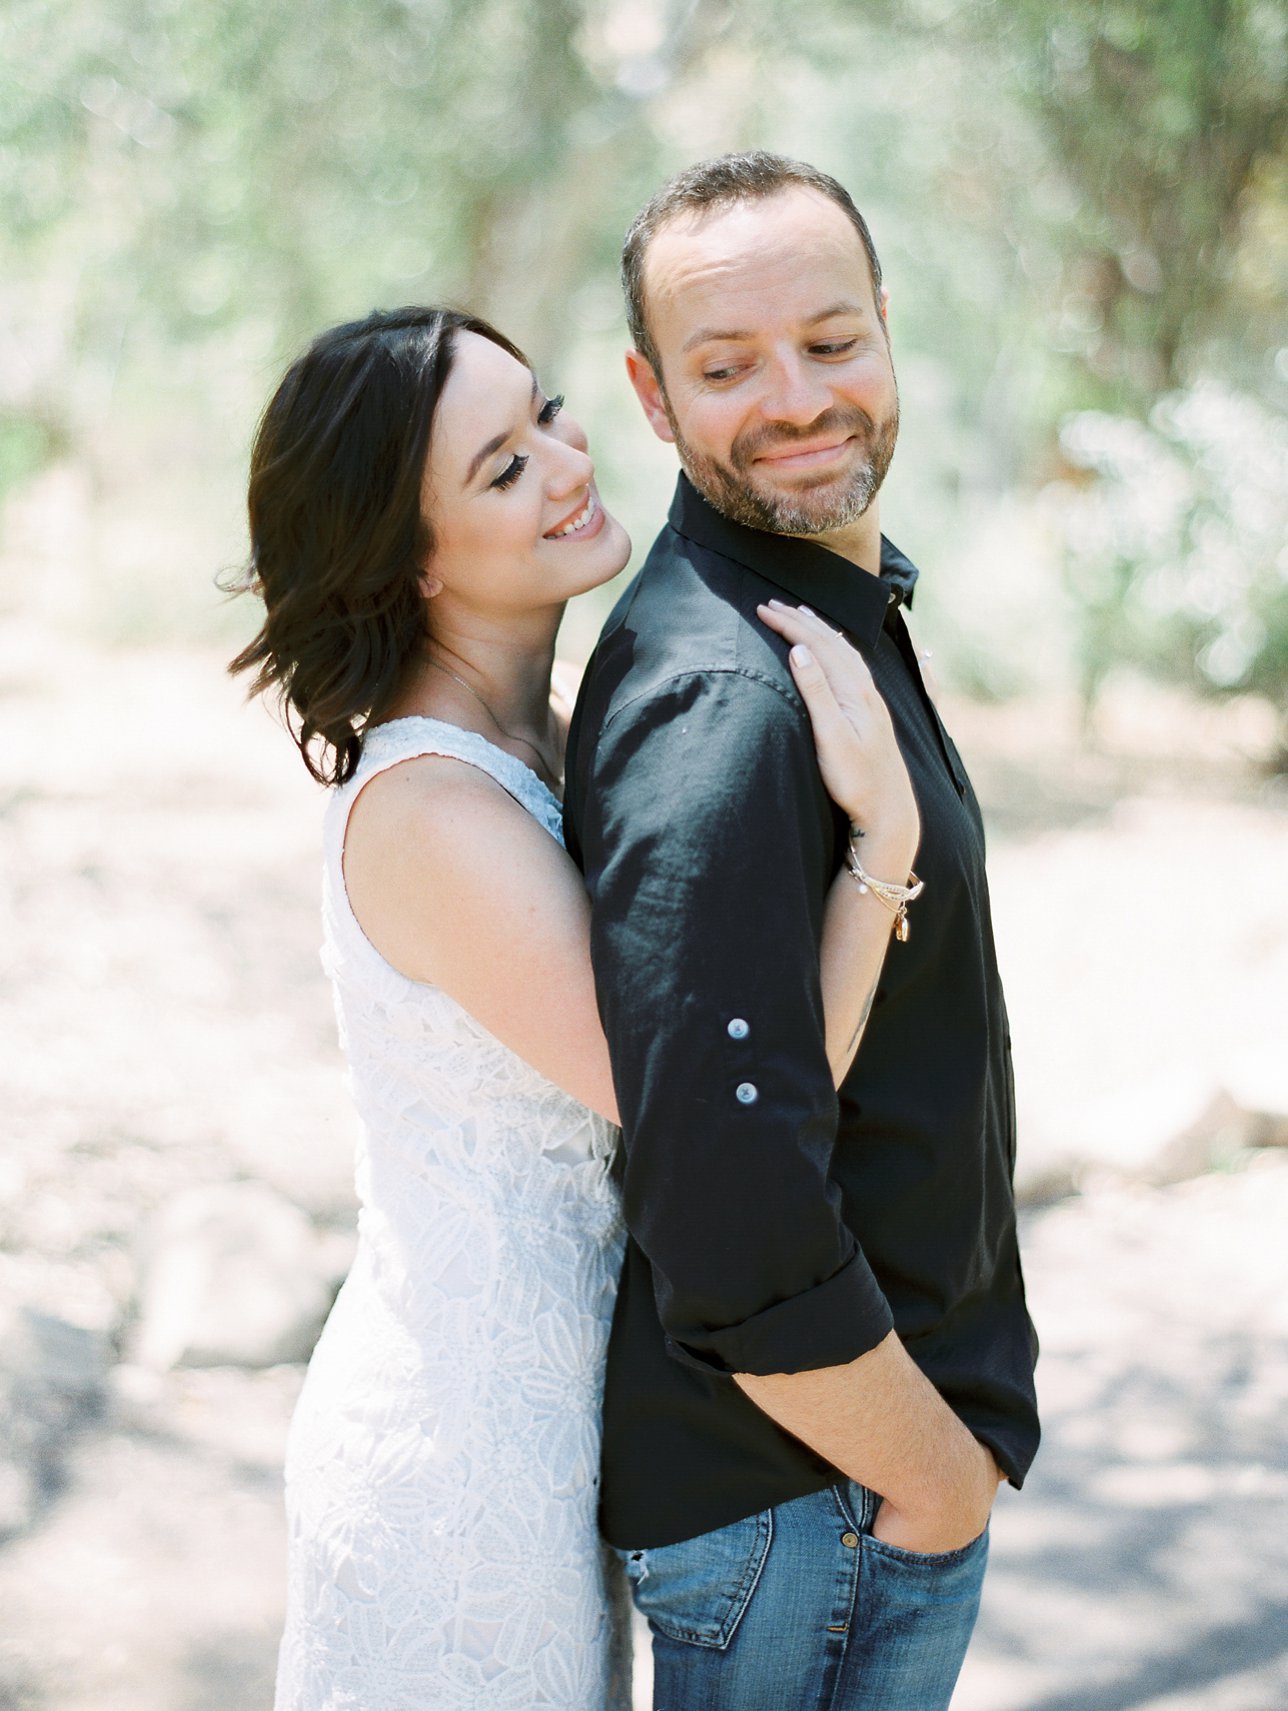 Boyce Thompson Arboretum engagement photos - Scottsdale Wedding Photographer | Rachel Solomon Photography_6645